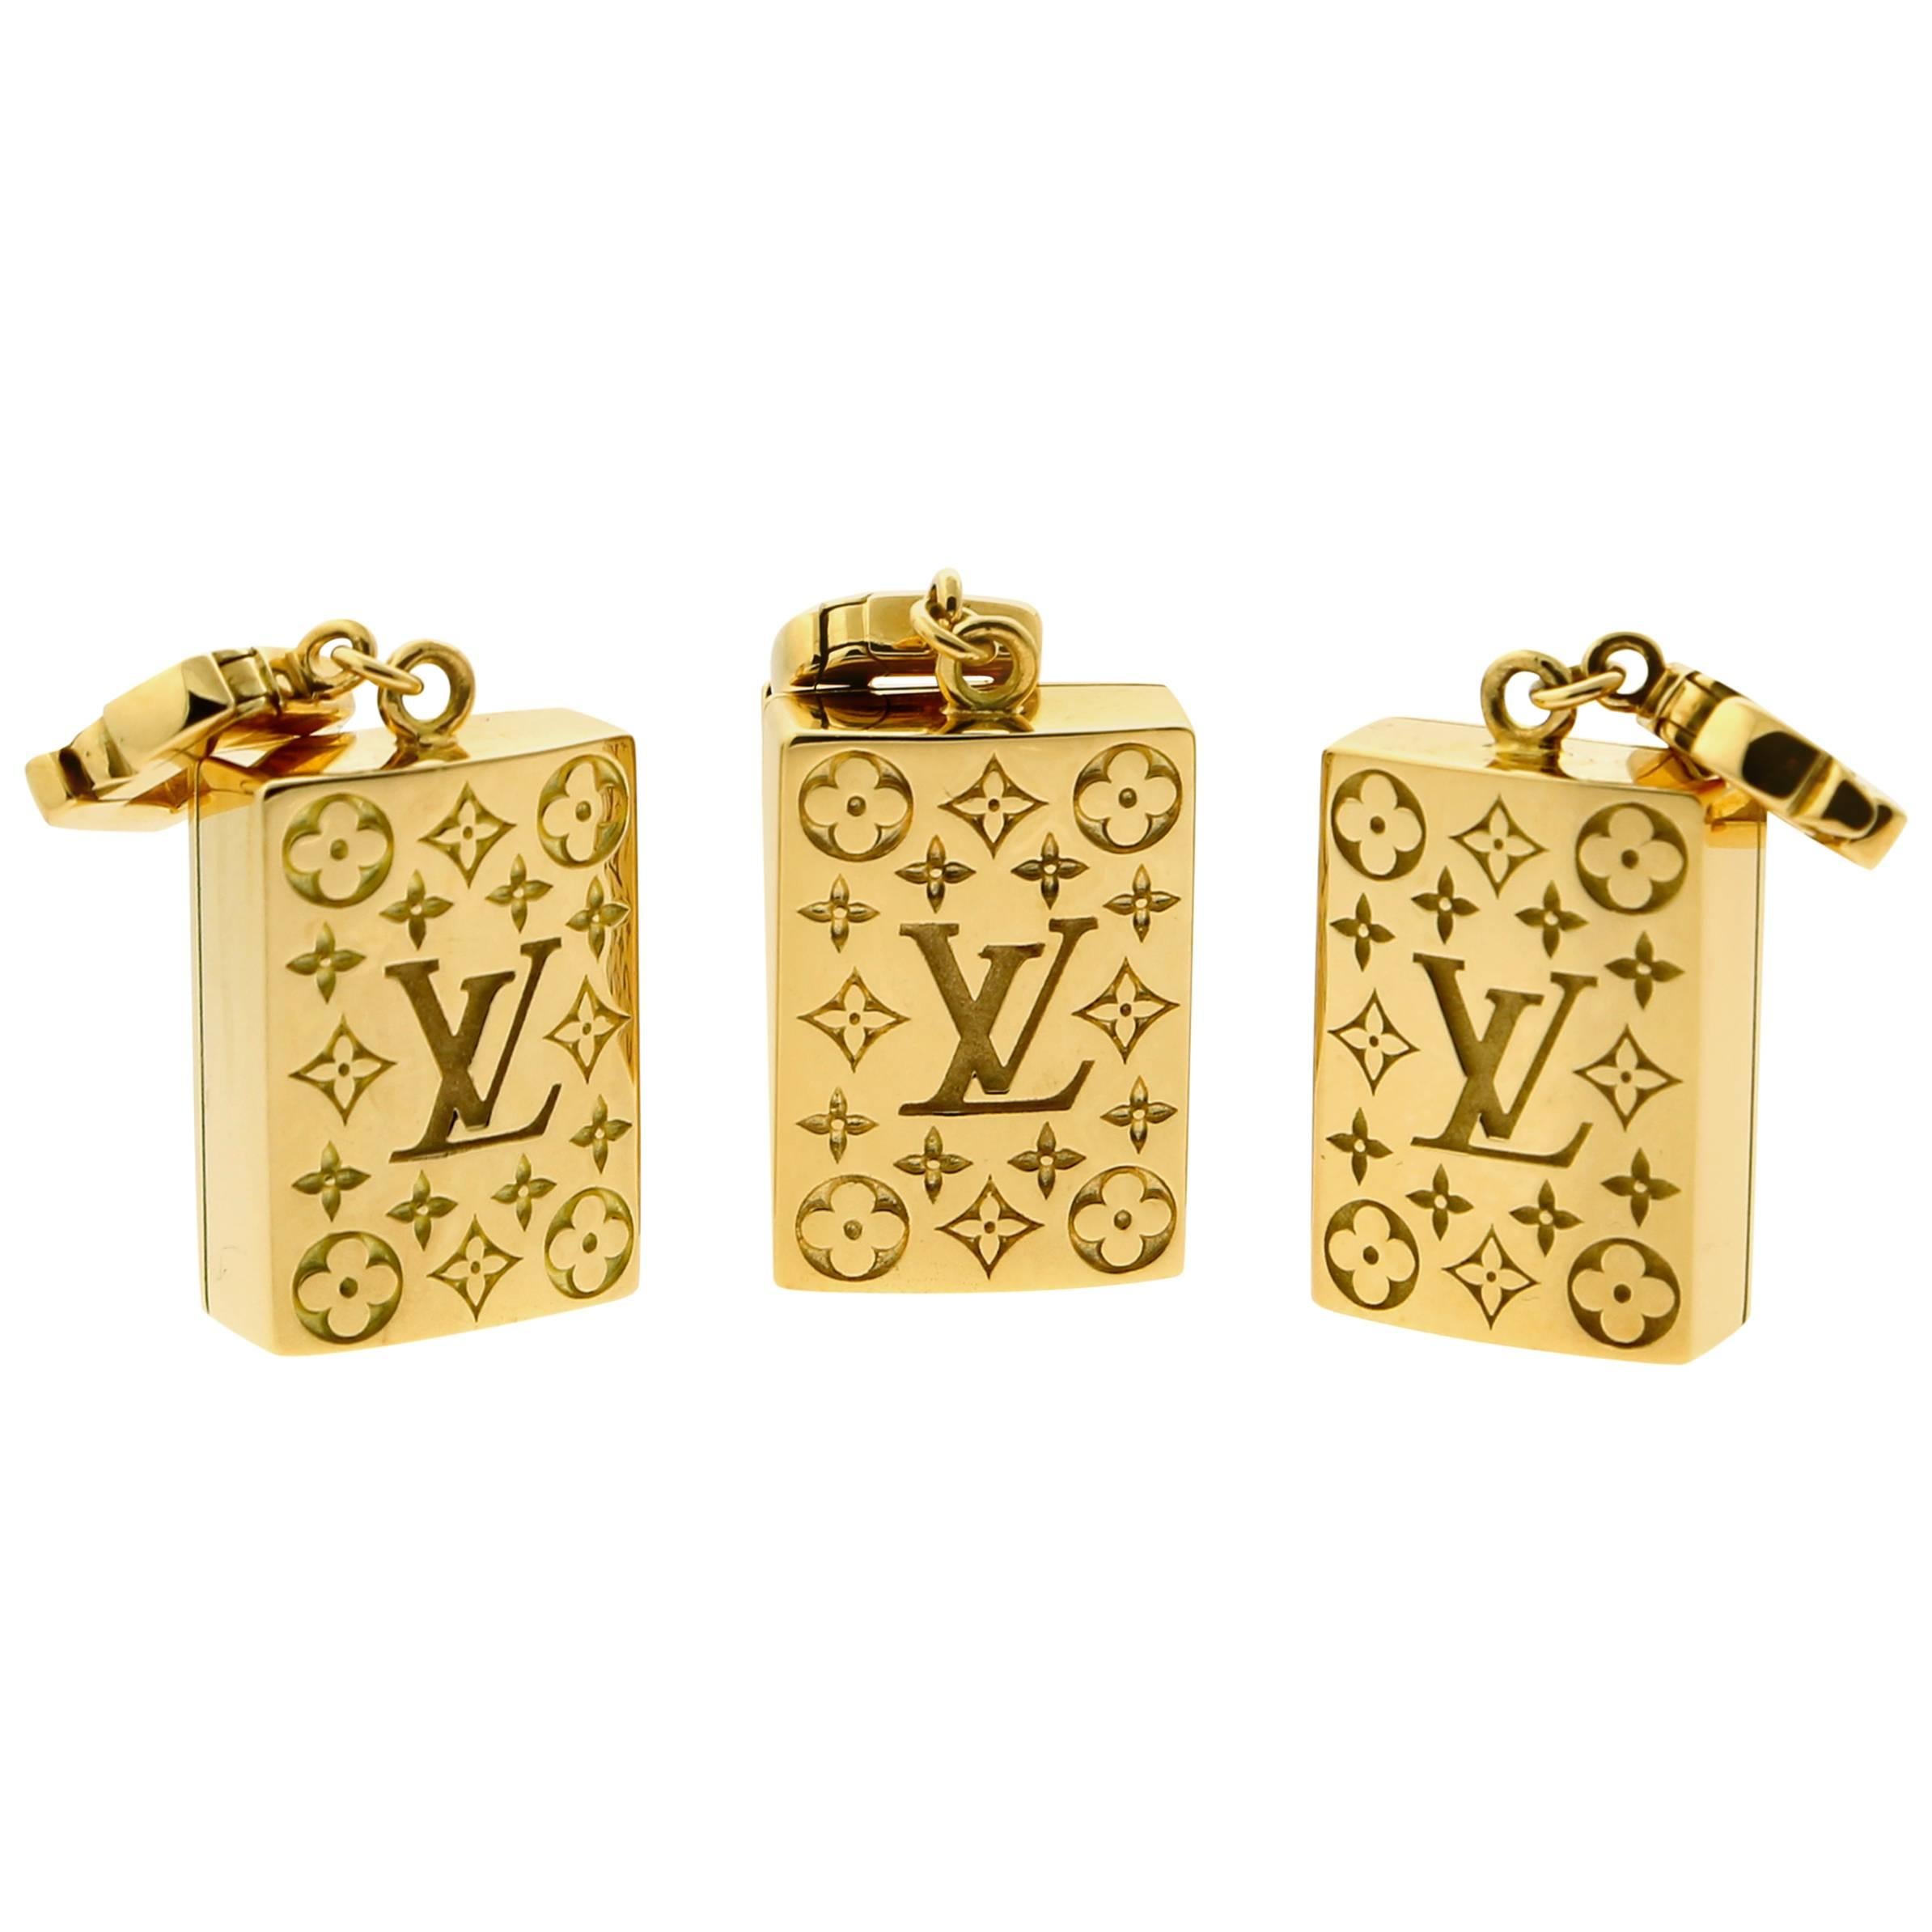 Louis Vuitton Limited Edition Mahjong Tile Gold Set For Sale